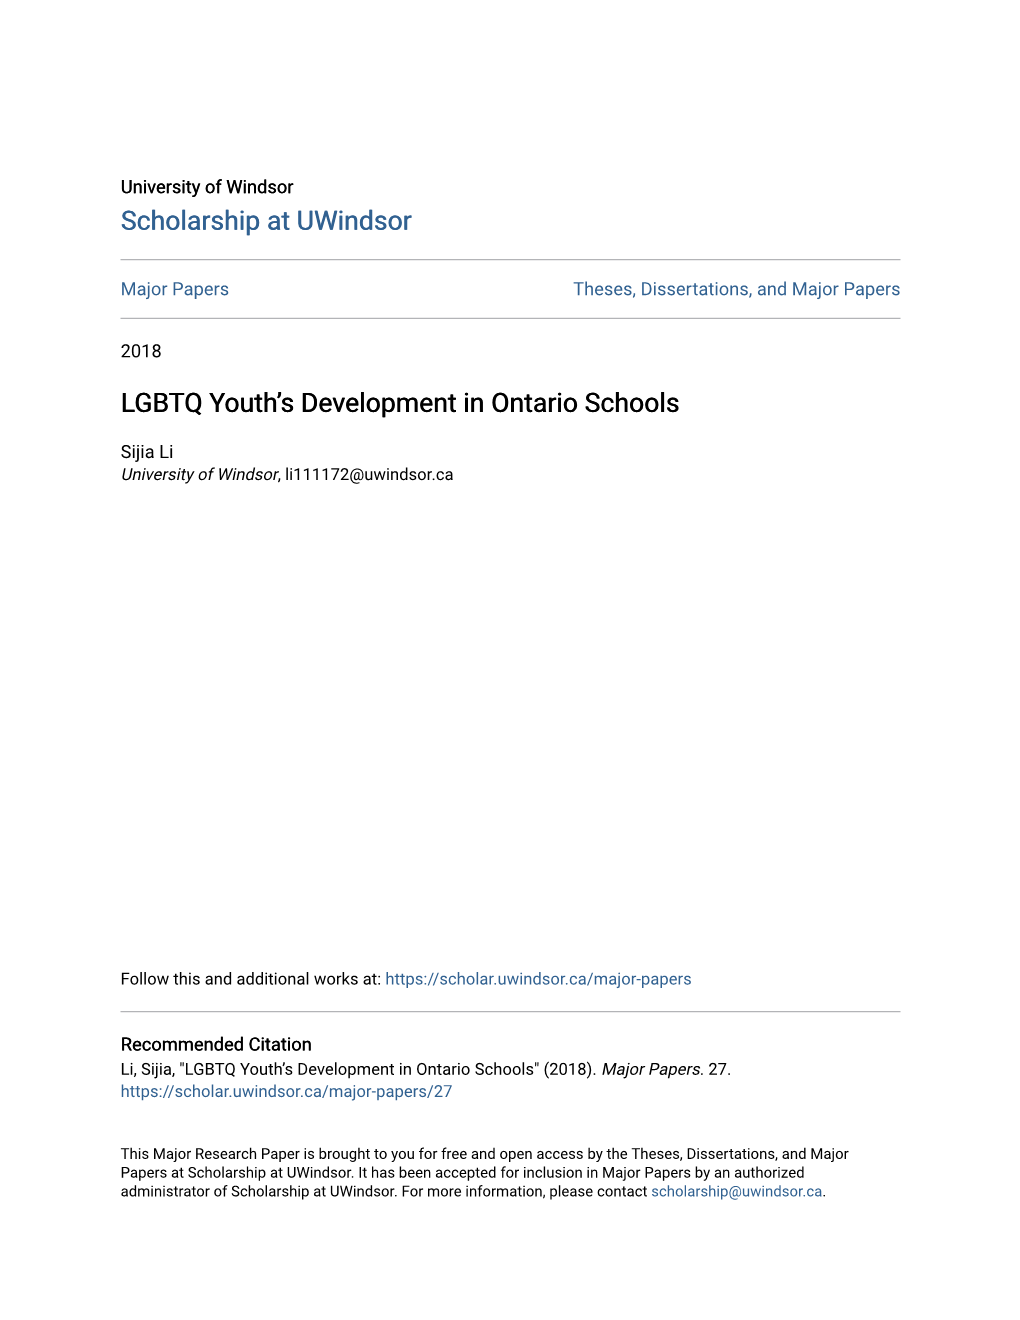 LGBTQ Youth's Development in Ontario Schools